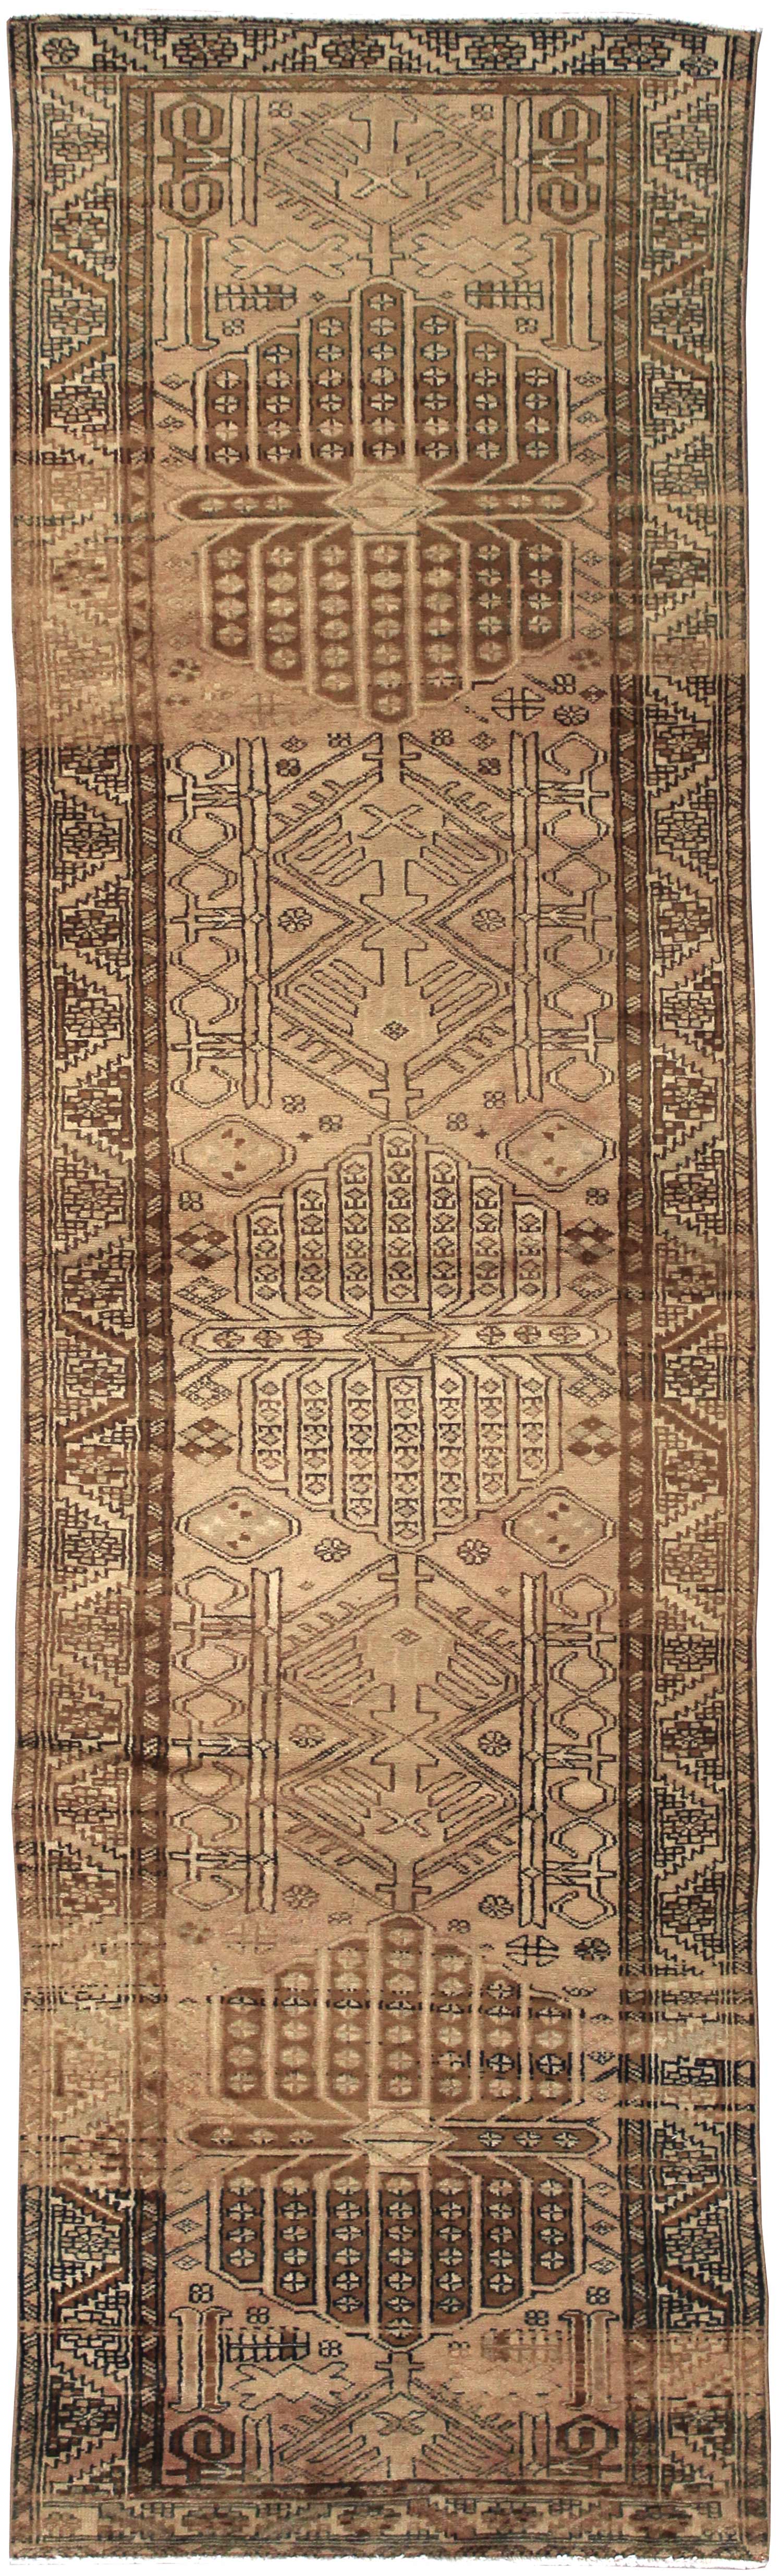 Antique Karaja Handwoven Tribal Rug